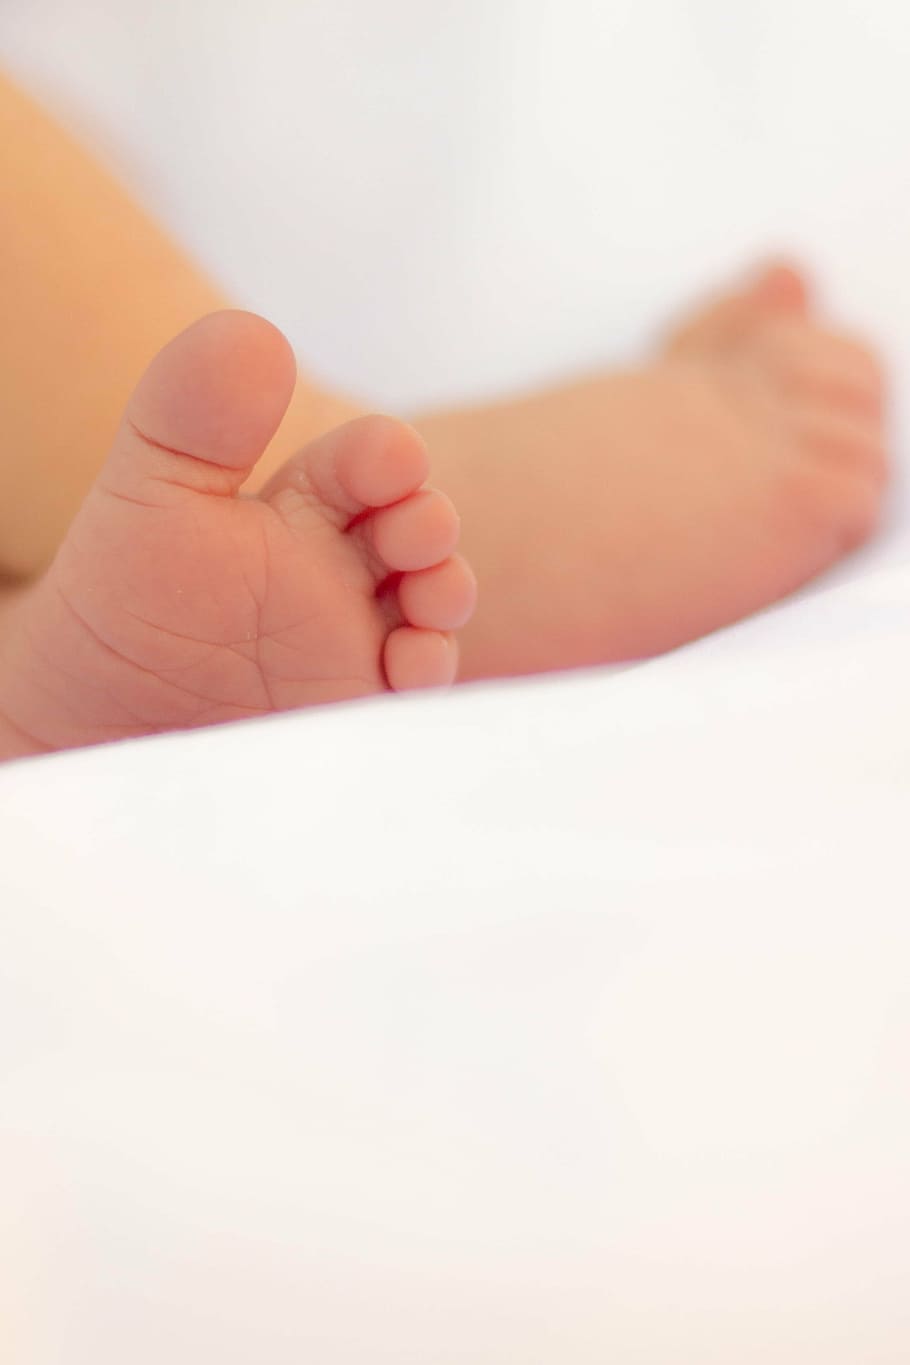 baby's feet, life, people, human, baby, child, toddler, feet, birth, human Hand